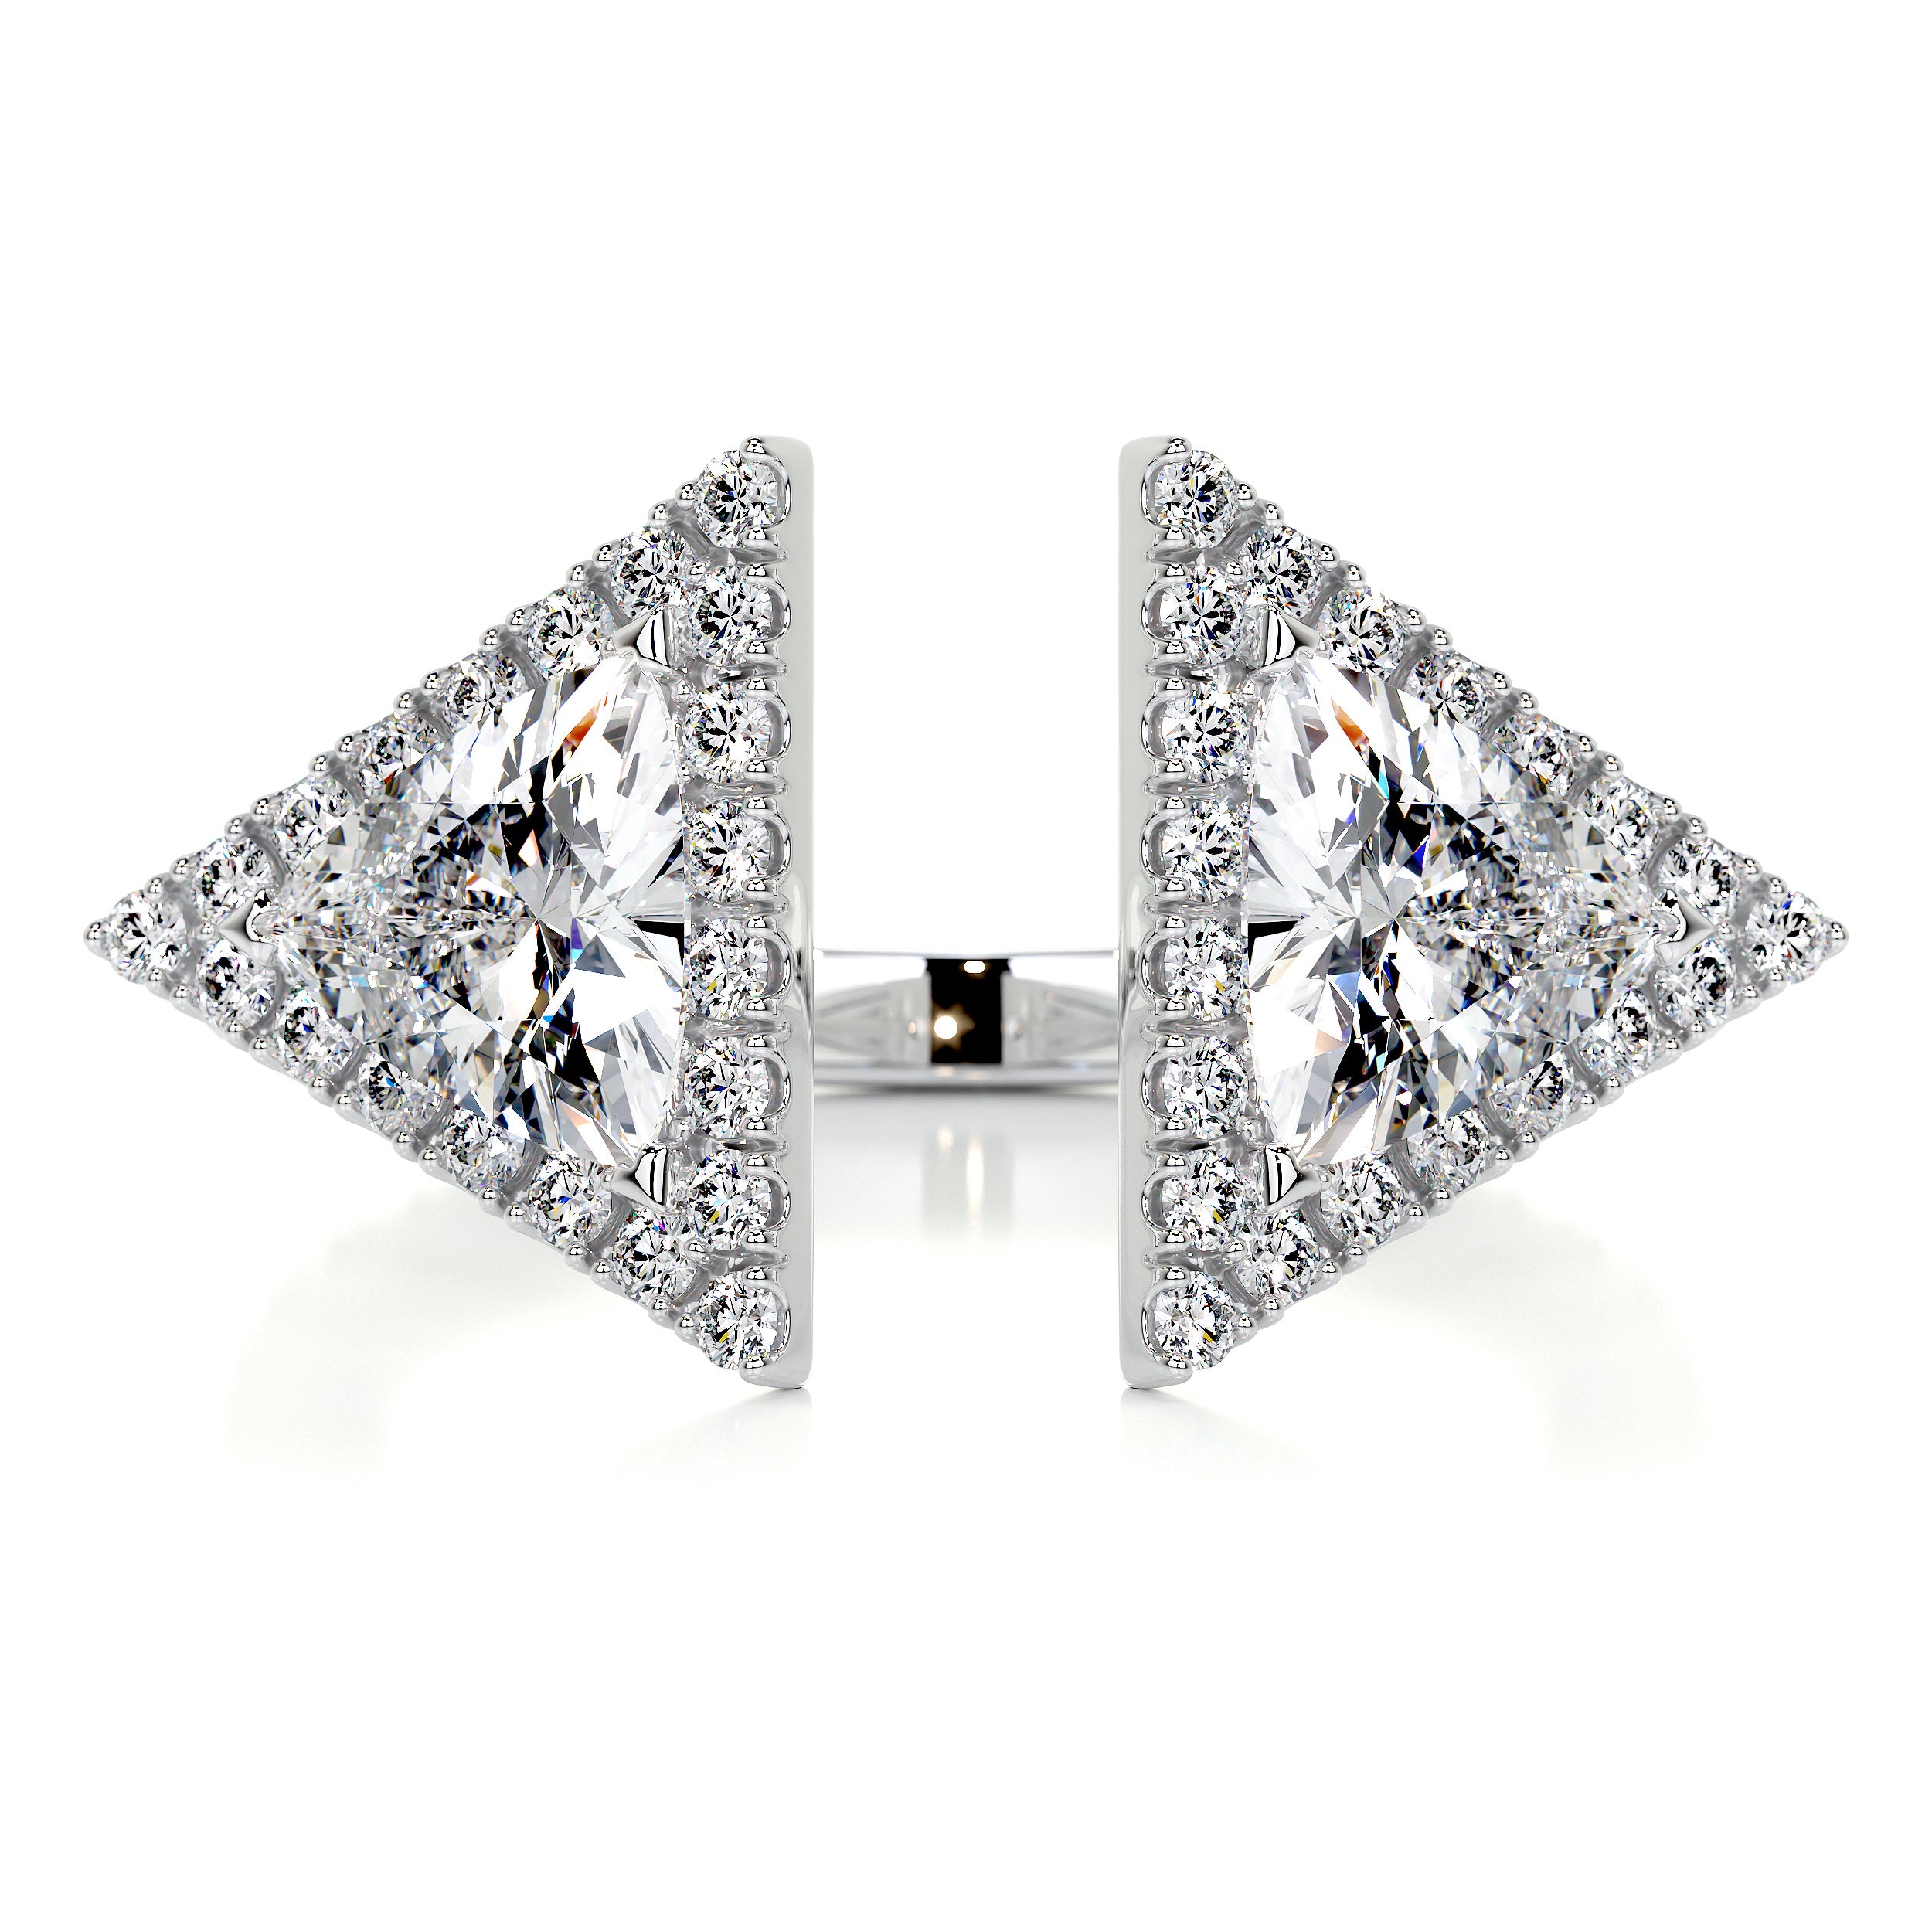 Jade Fashion Diamond Ring   (1.5 carat) -Platinum